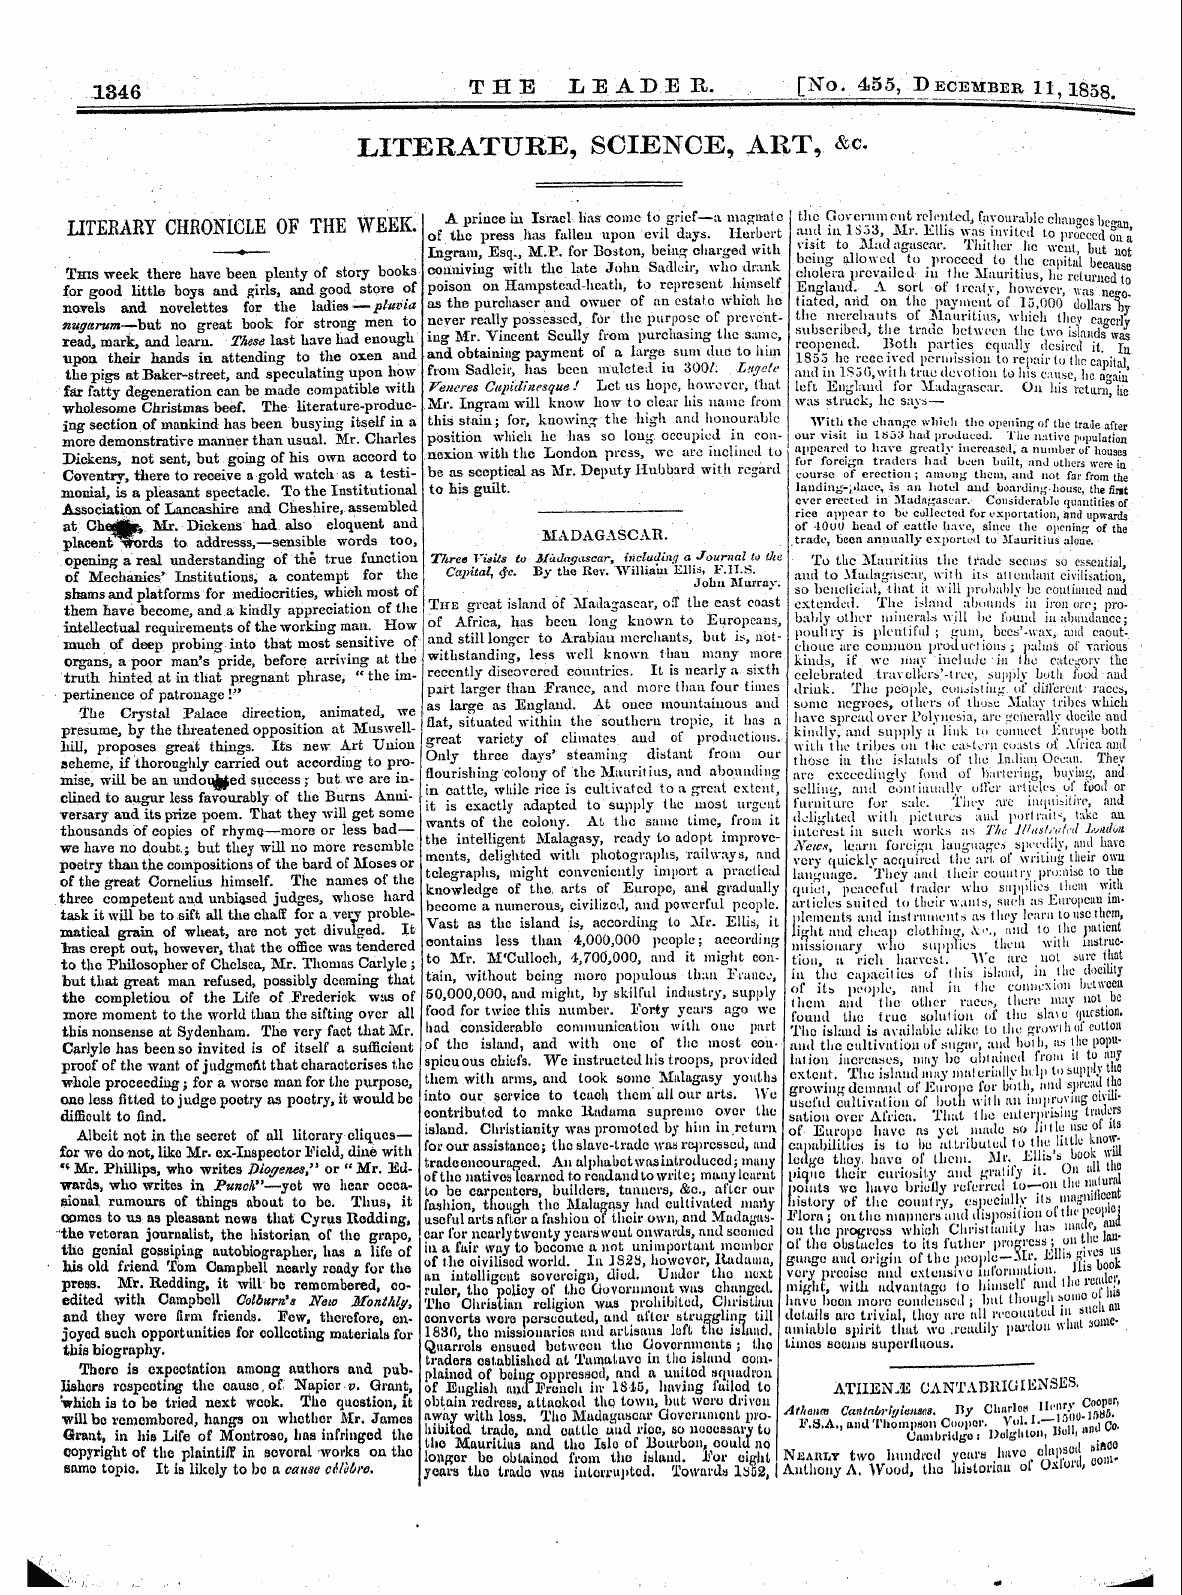 Leader (1850-1860): jS F Y, 1st edition - Literature, Science, Art, &C.